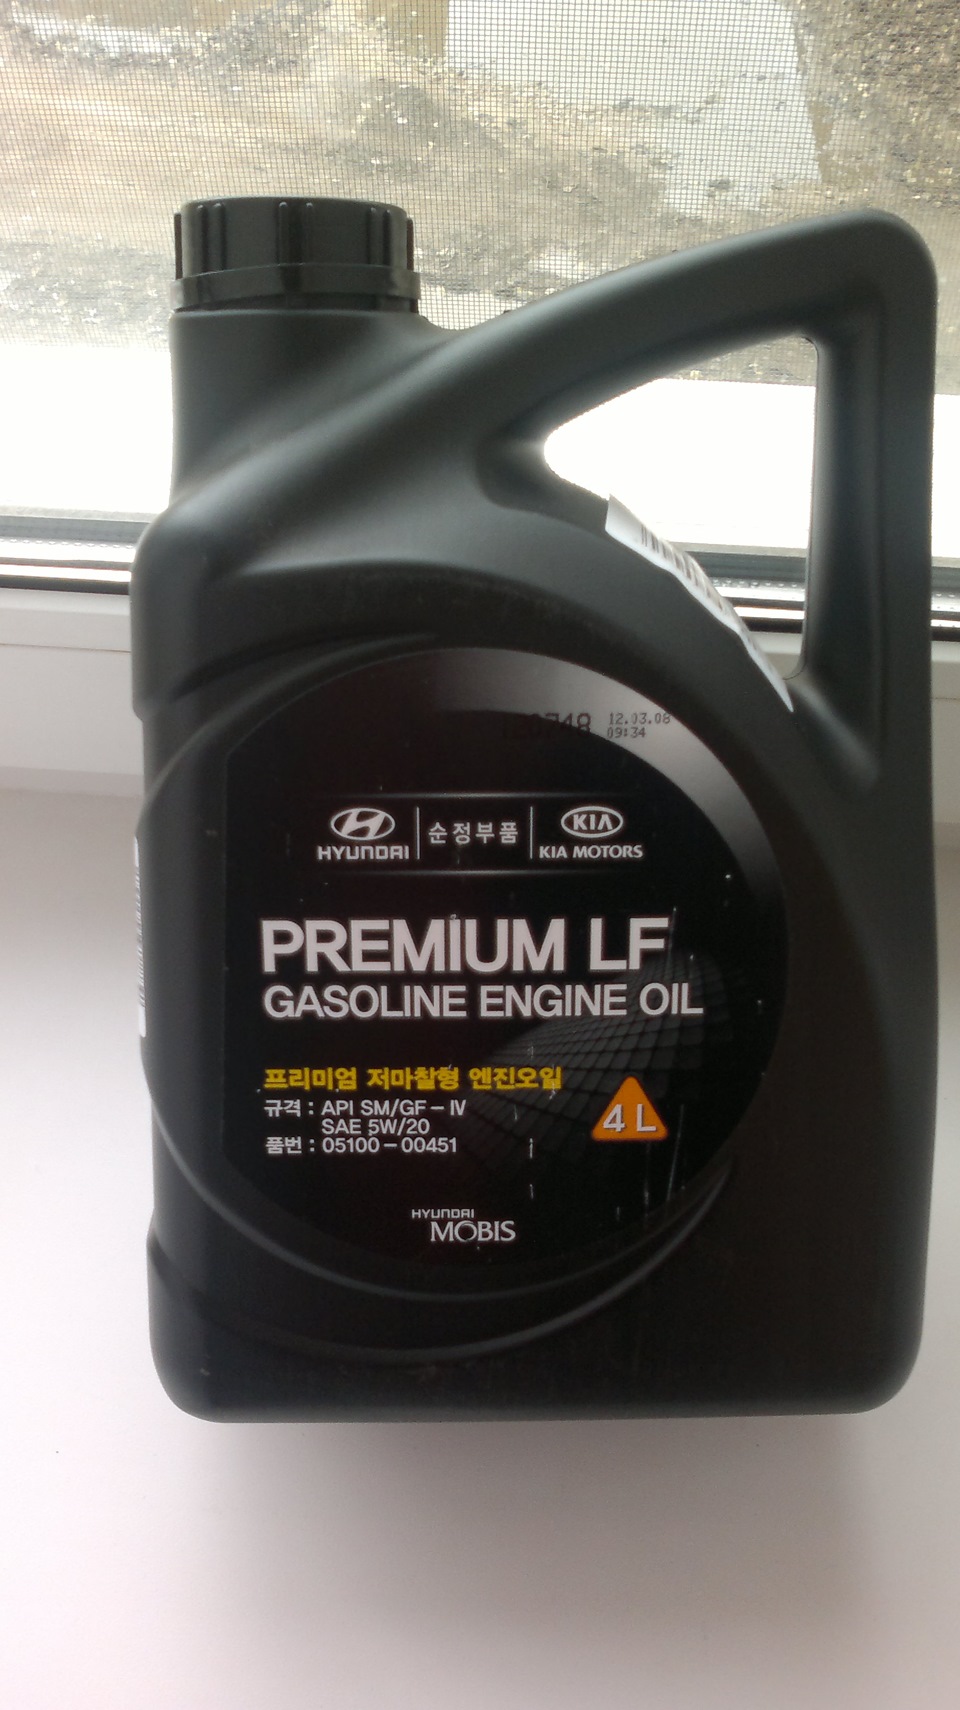 Киа к 5 масло. Моторное масло Киа Хендай 5w20. Hyundai/Kia Premium LF gasoline SM/gf-4 5w20. Kia Premium LF gasoline 5w-20. Kia Premium LF gasoline.